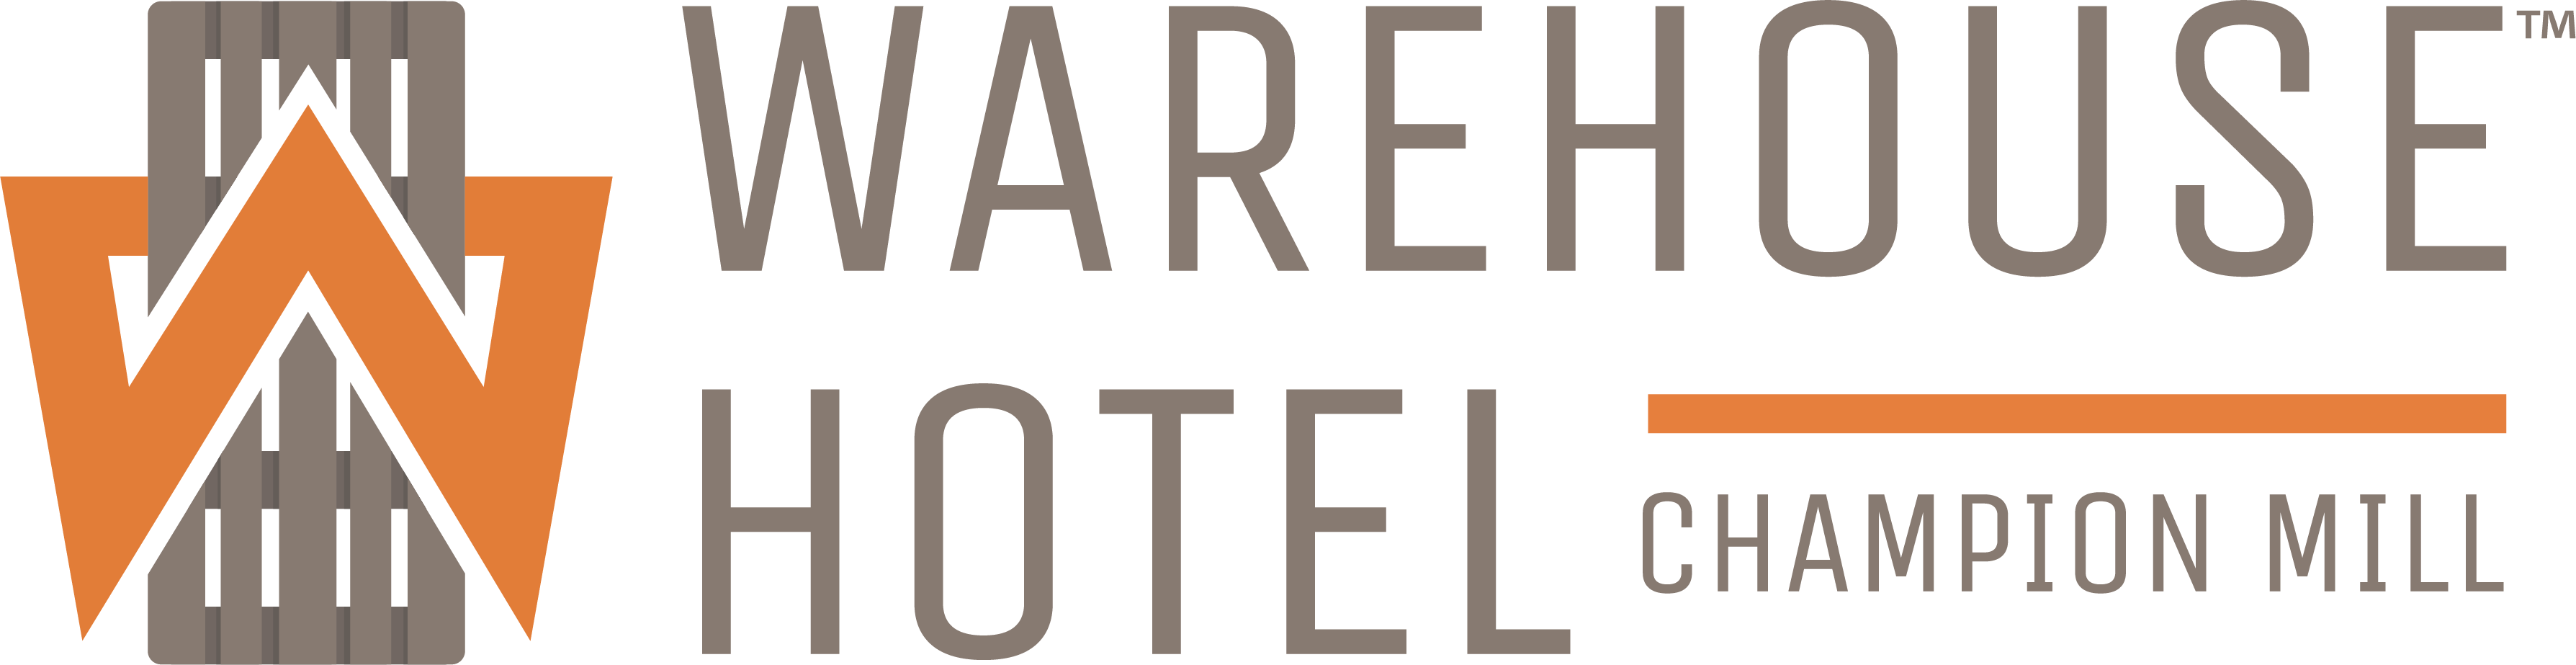 Warehouse Hotel Horizontal Logo